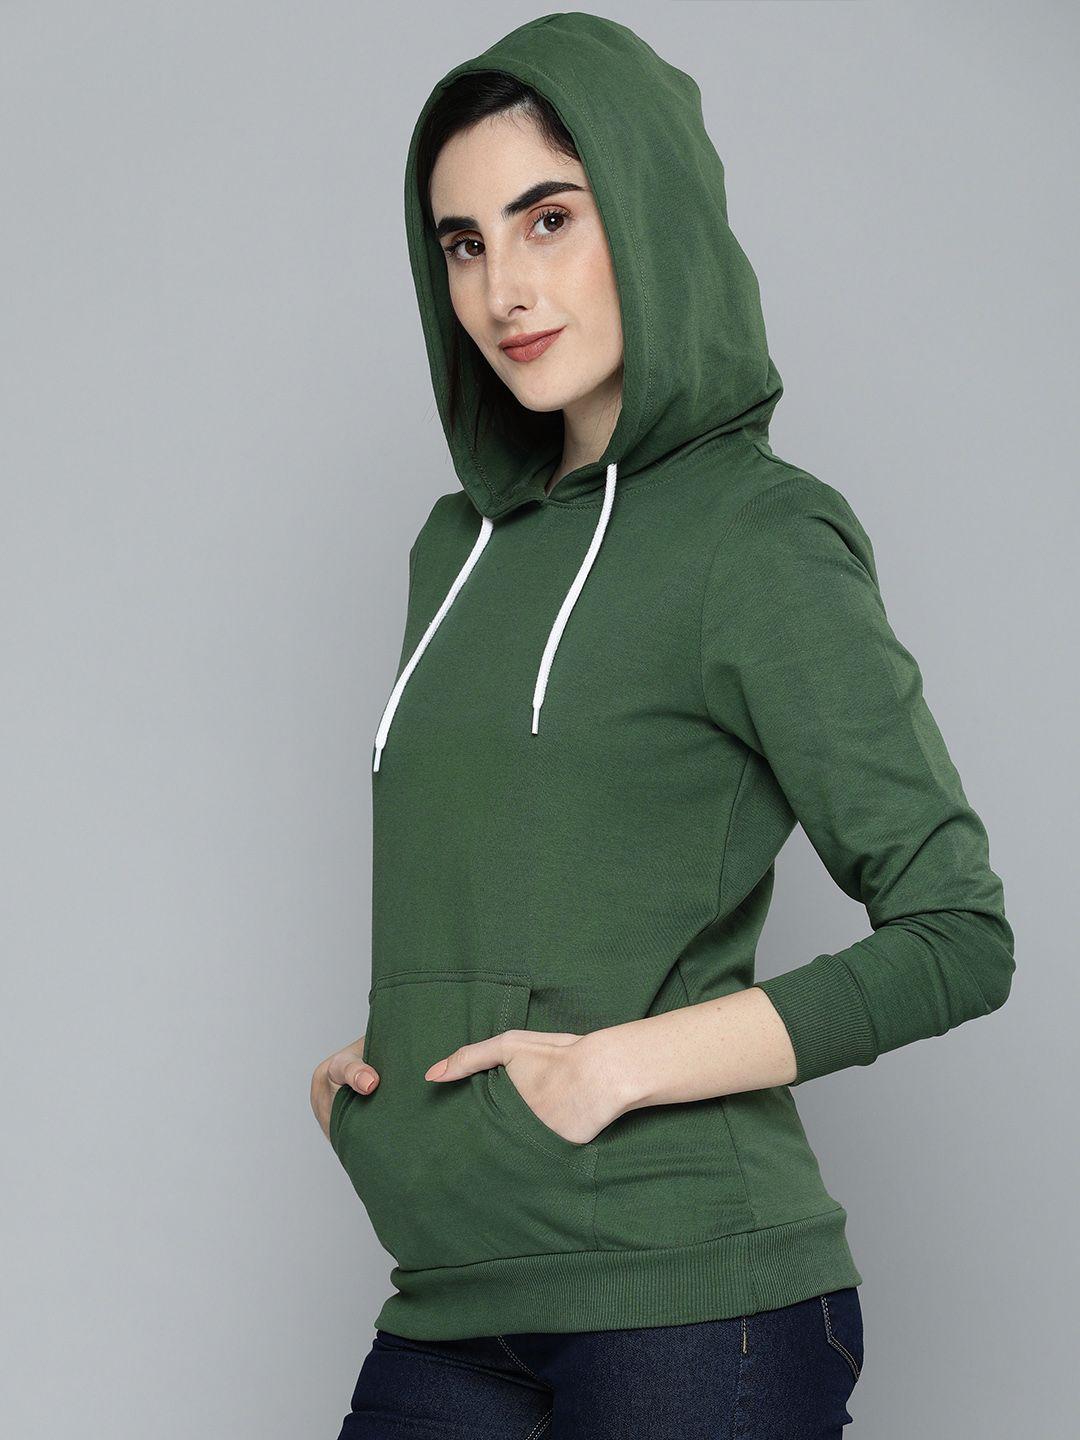 here&now women dark green solid pure cotton hooded pullover sweatshirt